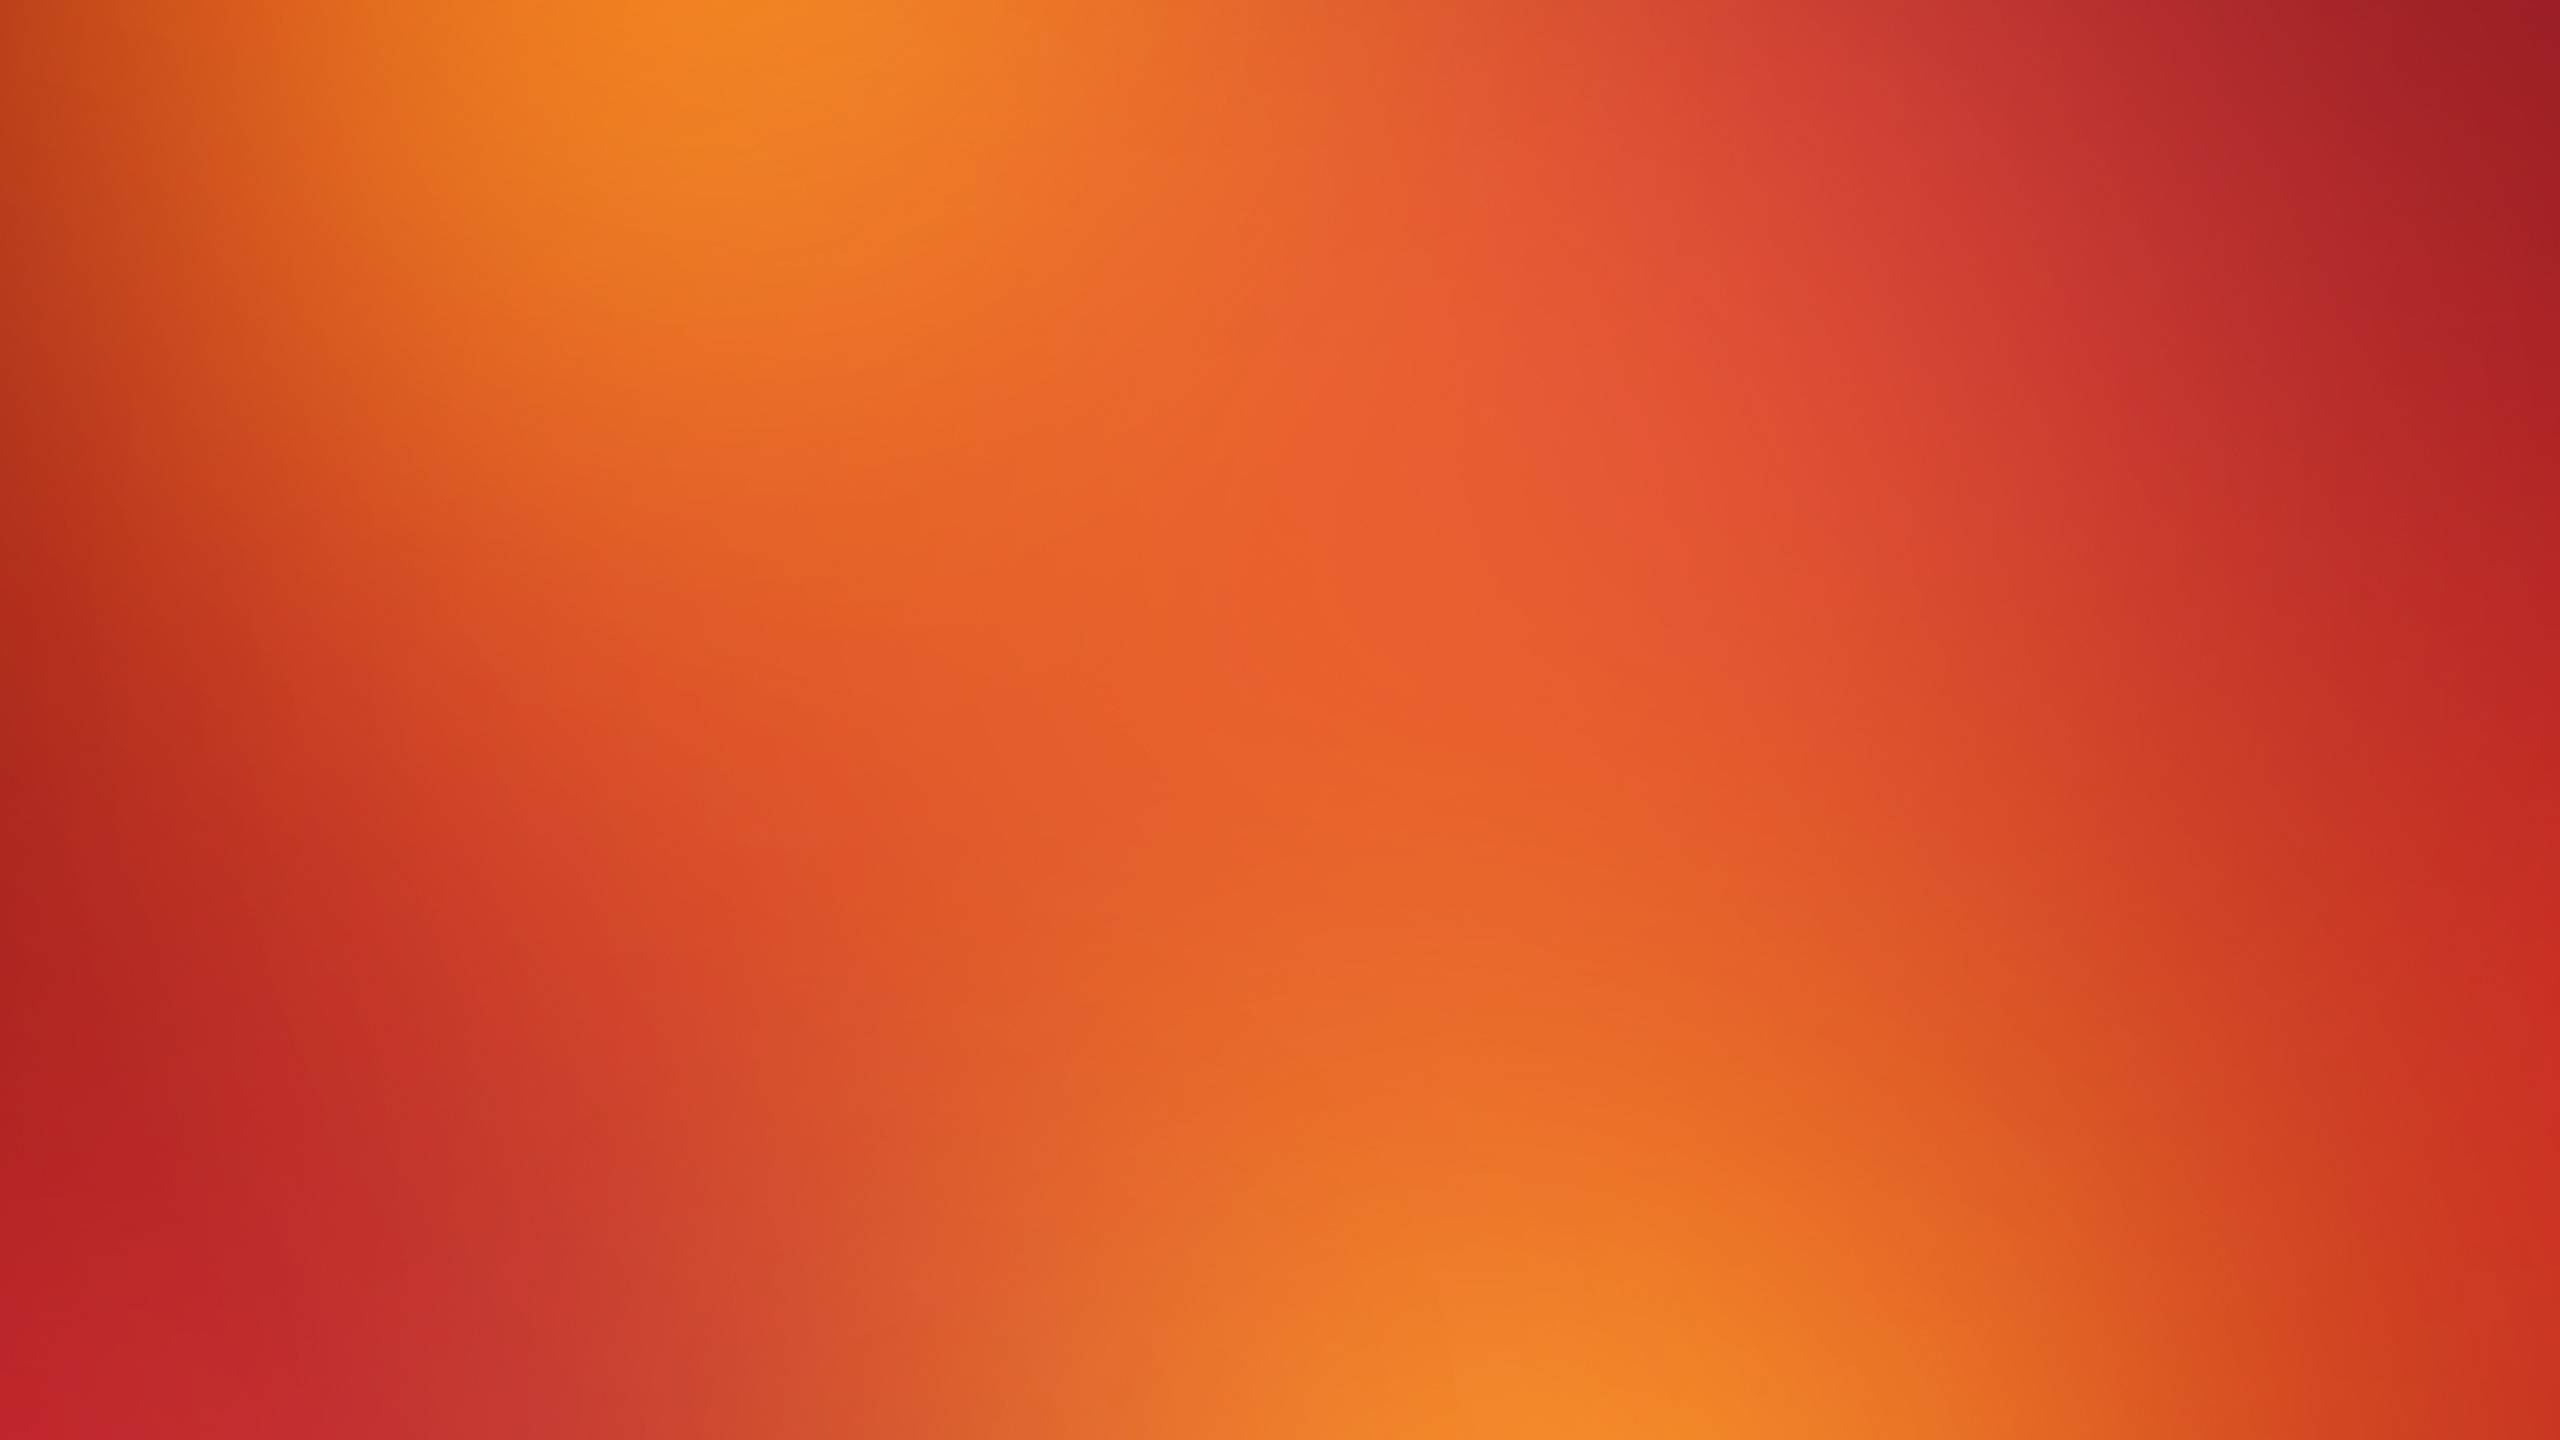 Red and orange wallpaper   SF Wallpaper